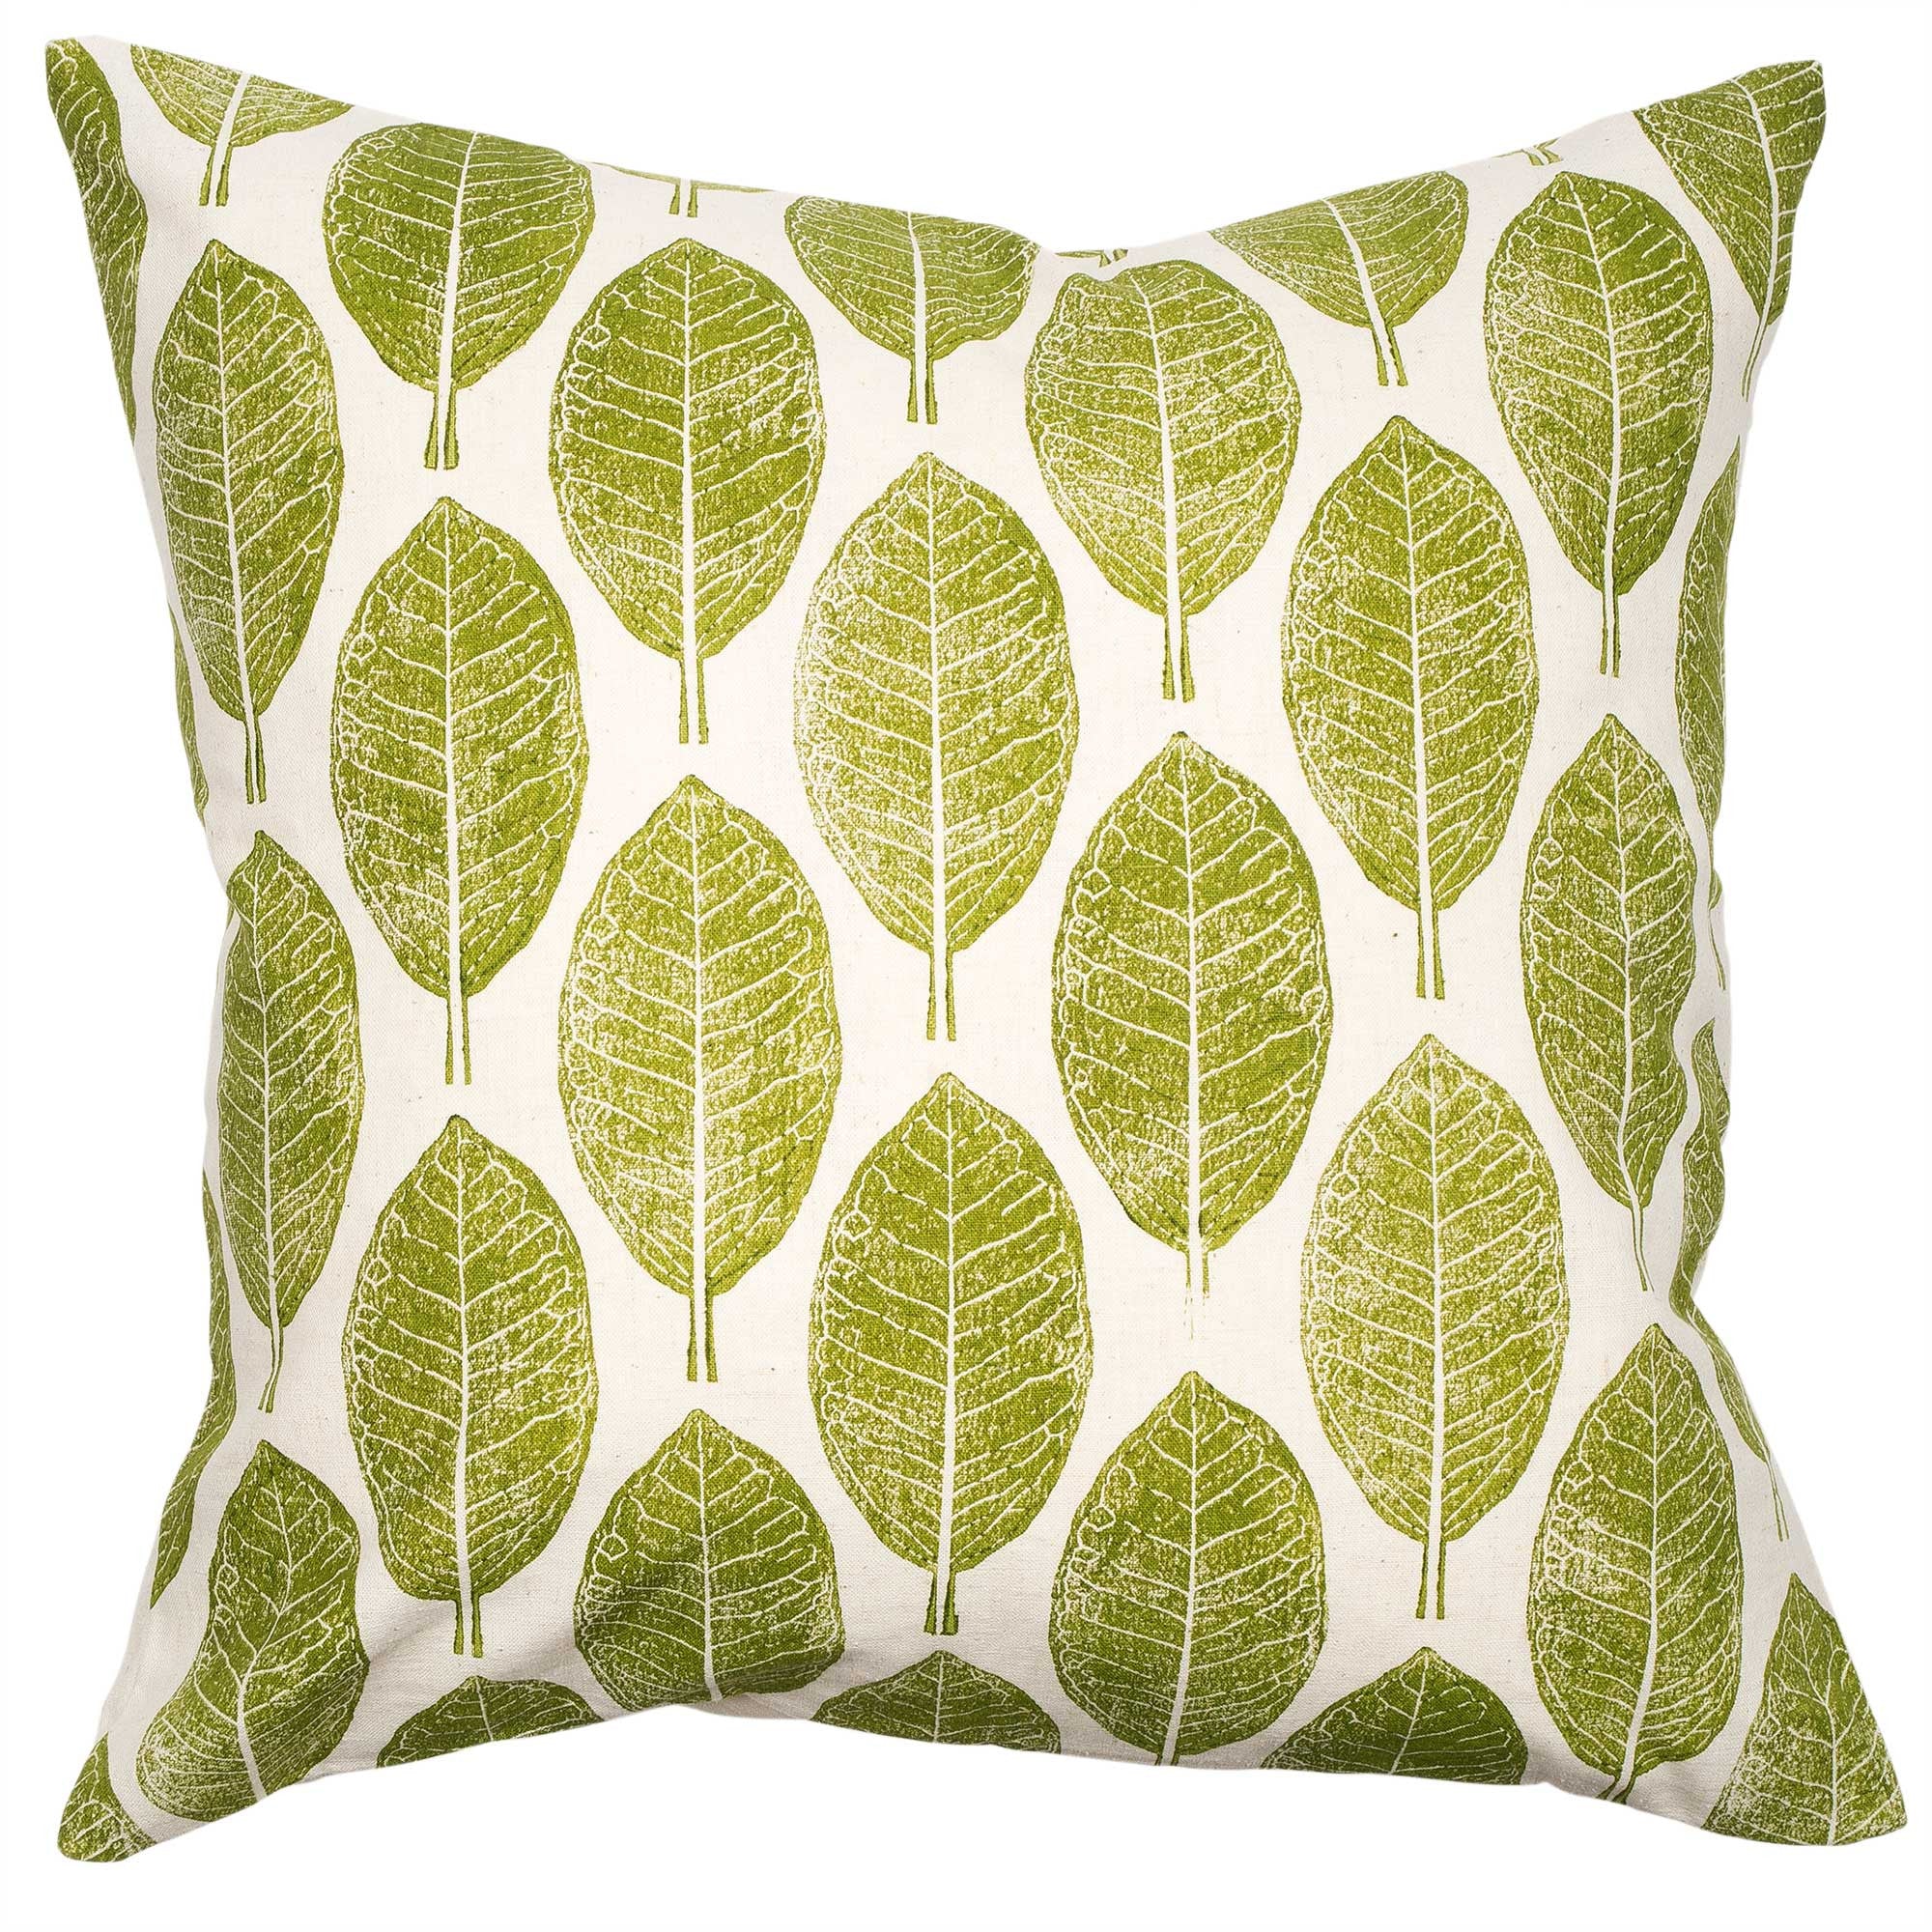 Green Leaves cushion